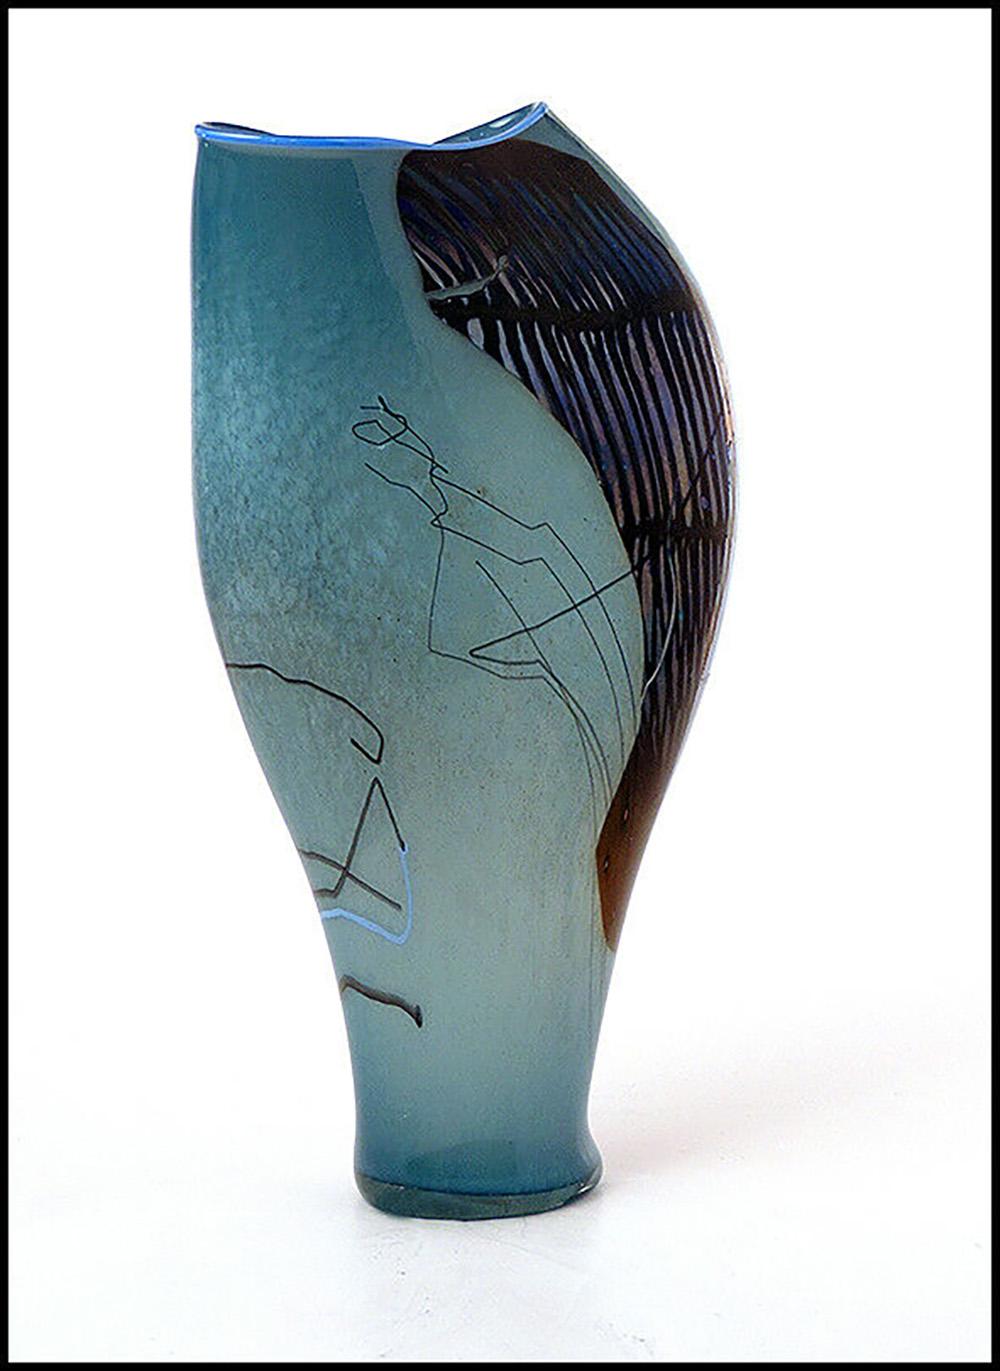 Artist: William Morris
Title: Original Blue Shard Vessel
Medium: Hand Blown Glass
Year: 1980
Edition Number: Original Vessel
Artwork Size: 10.5 x 5.5 inches